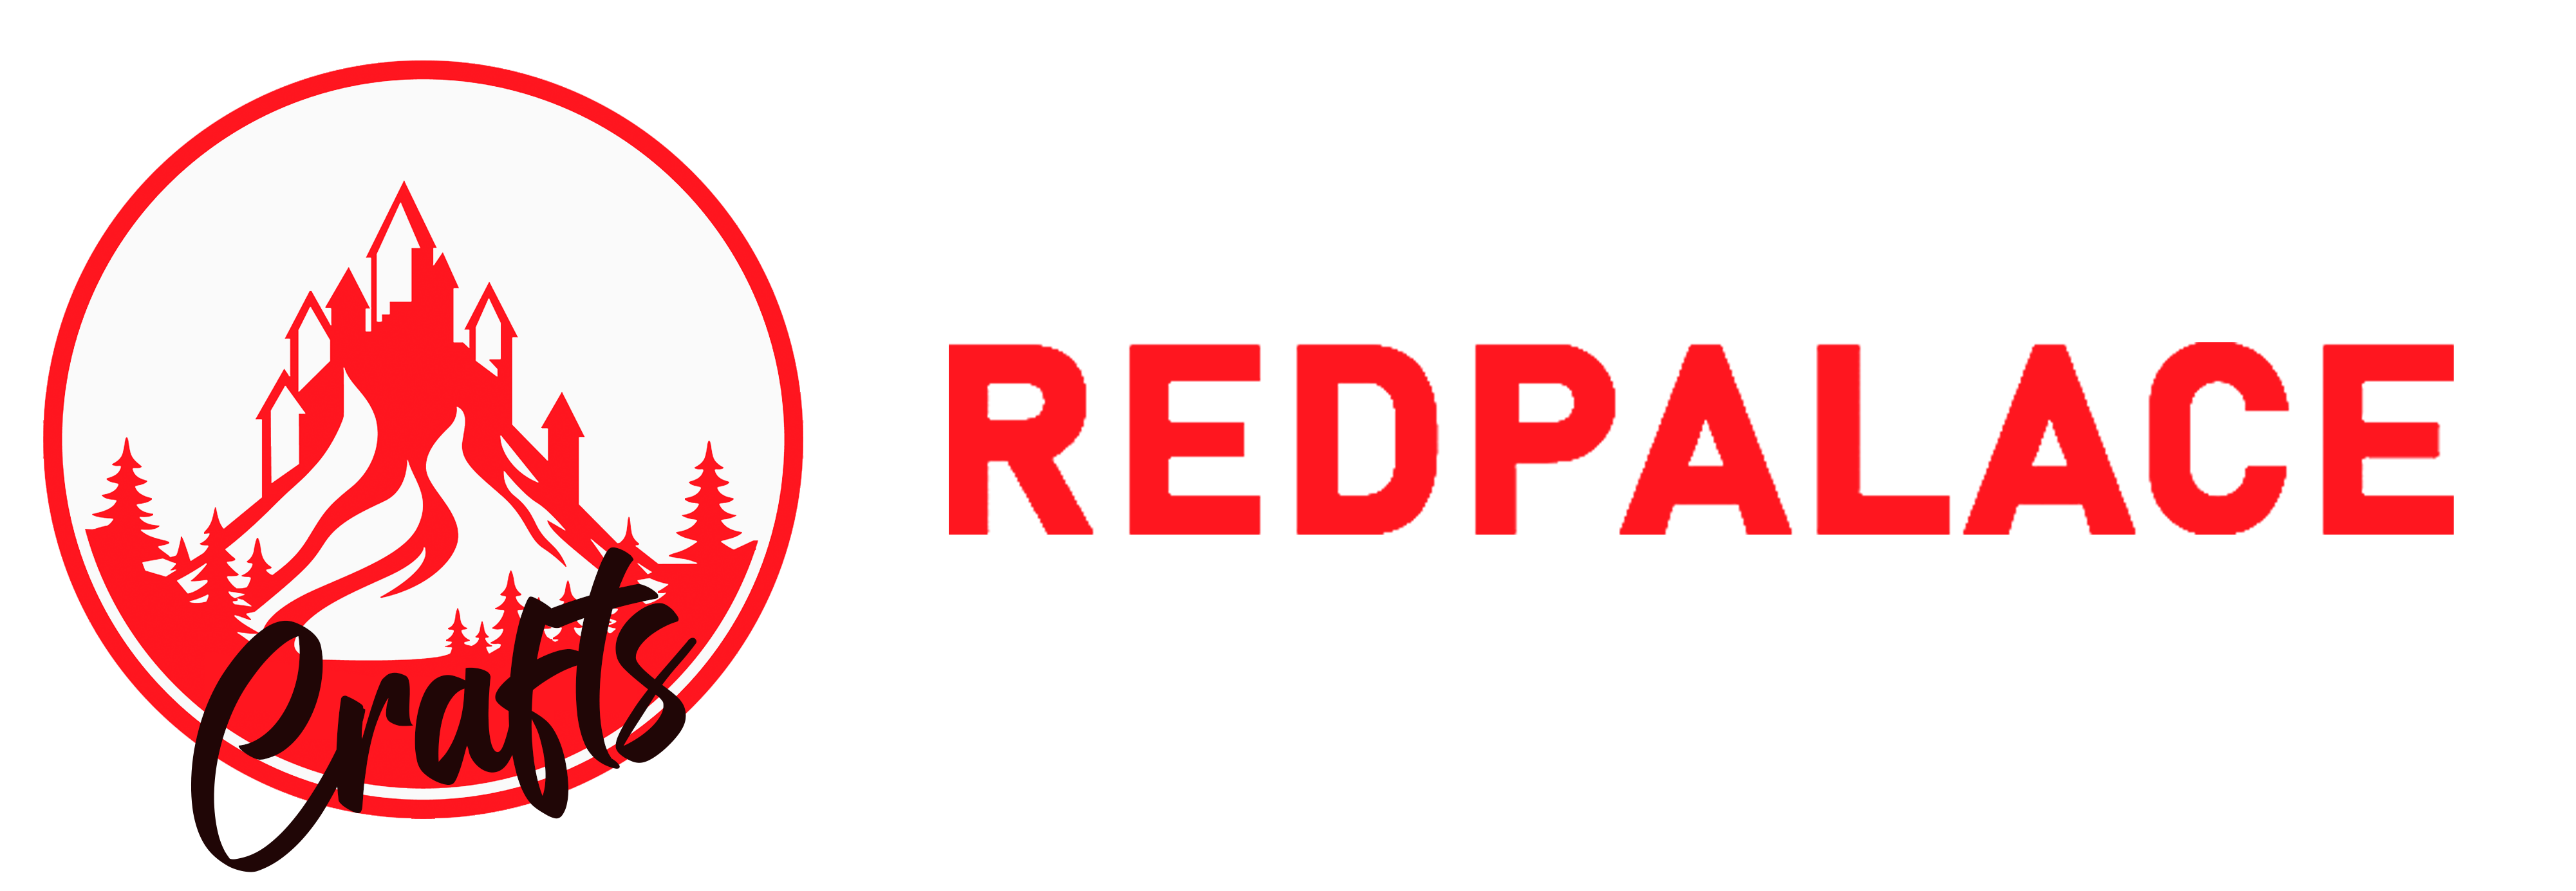 Artesanía RedPalace